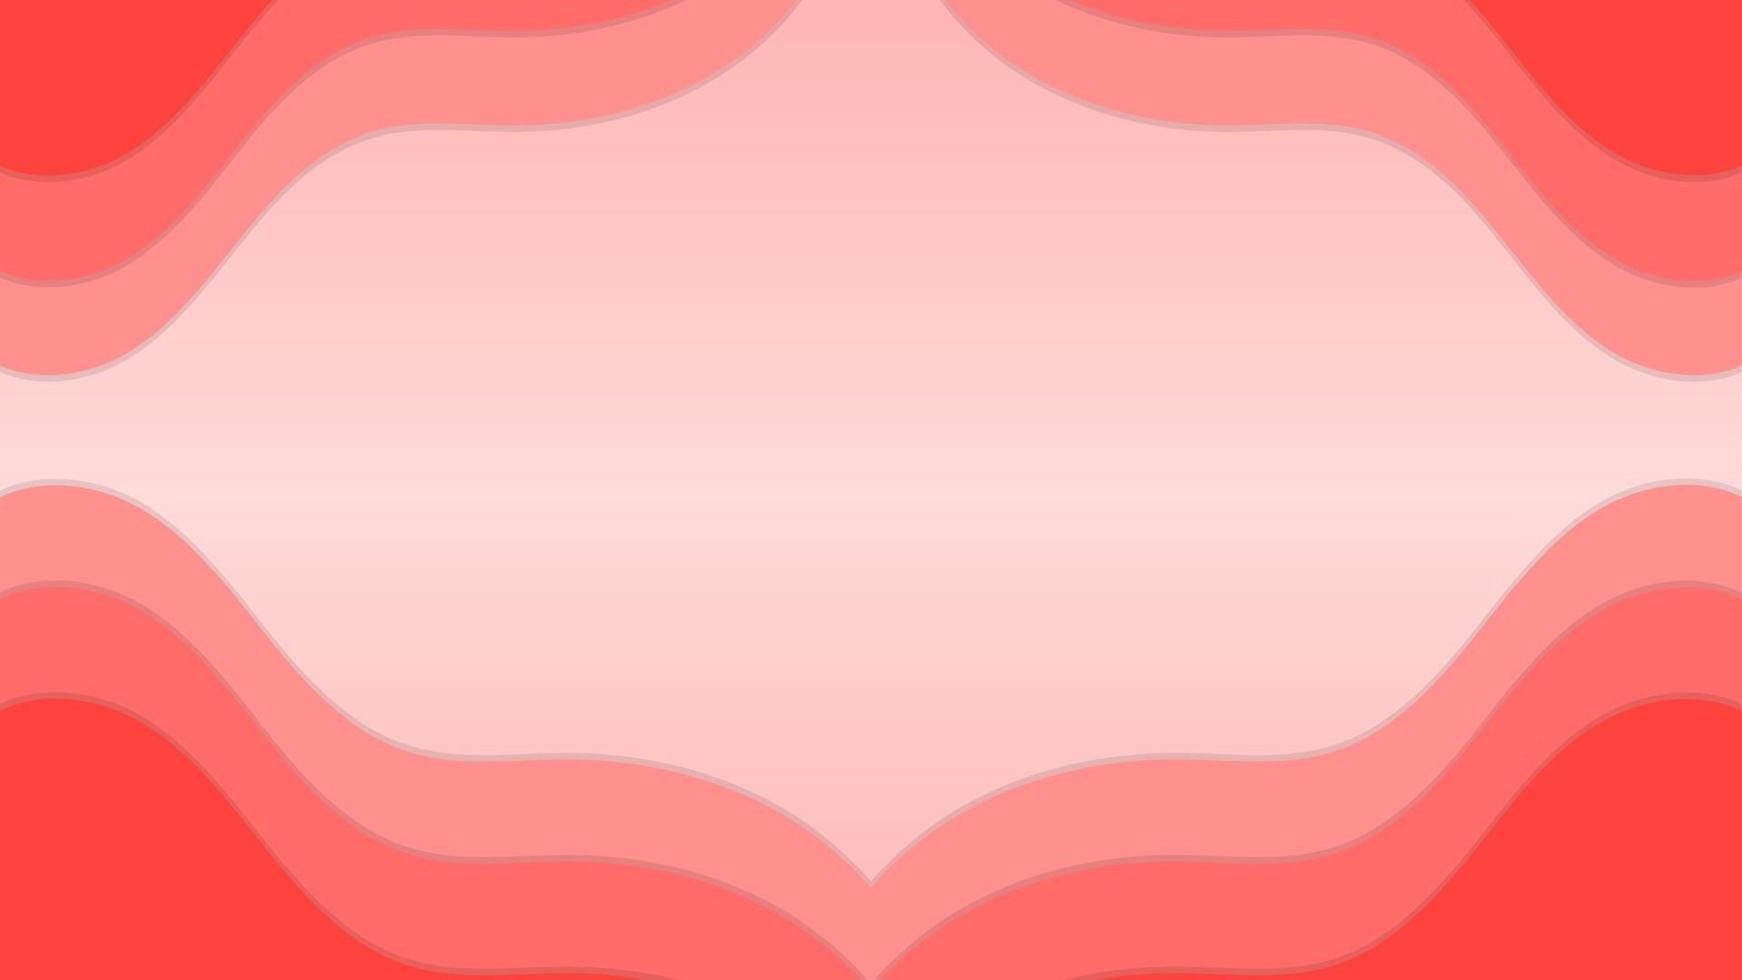 rode gradiënt papercut achtergrond pastel rode kleuren met glanzend effect vector